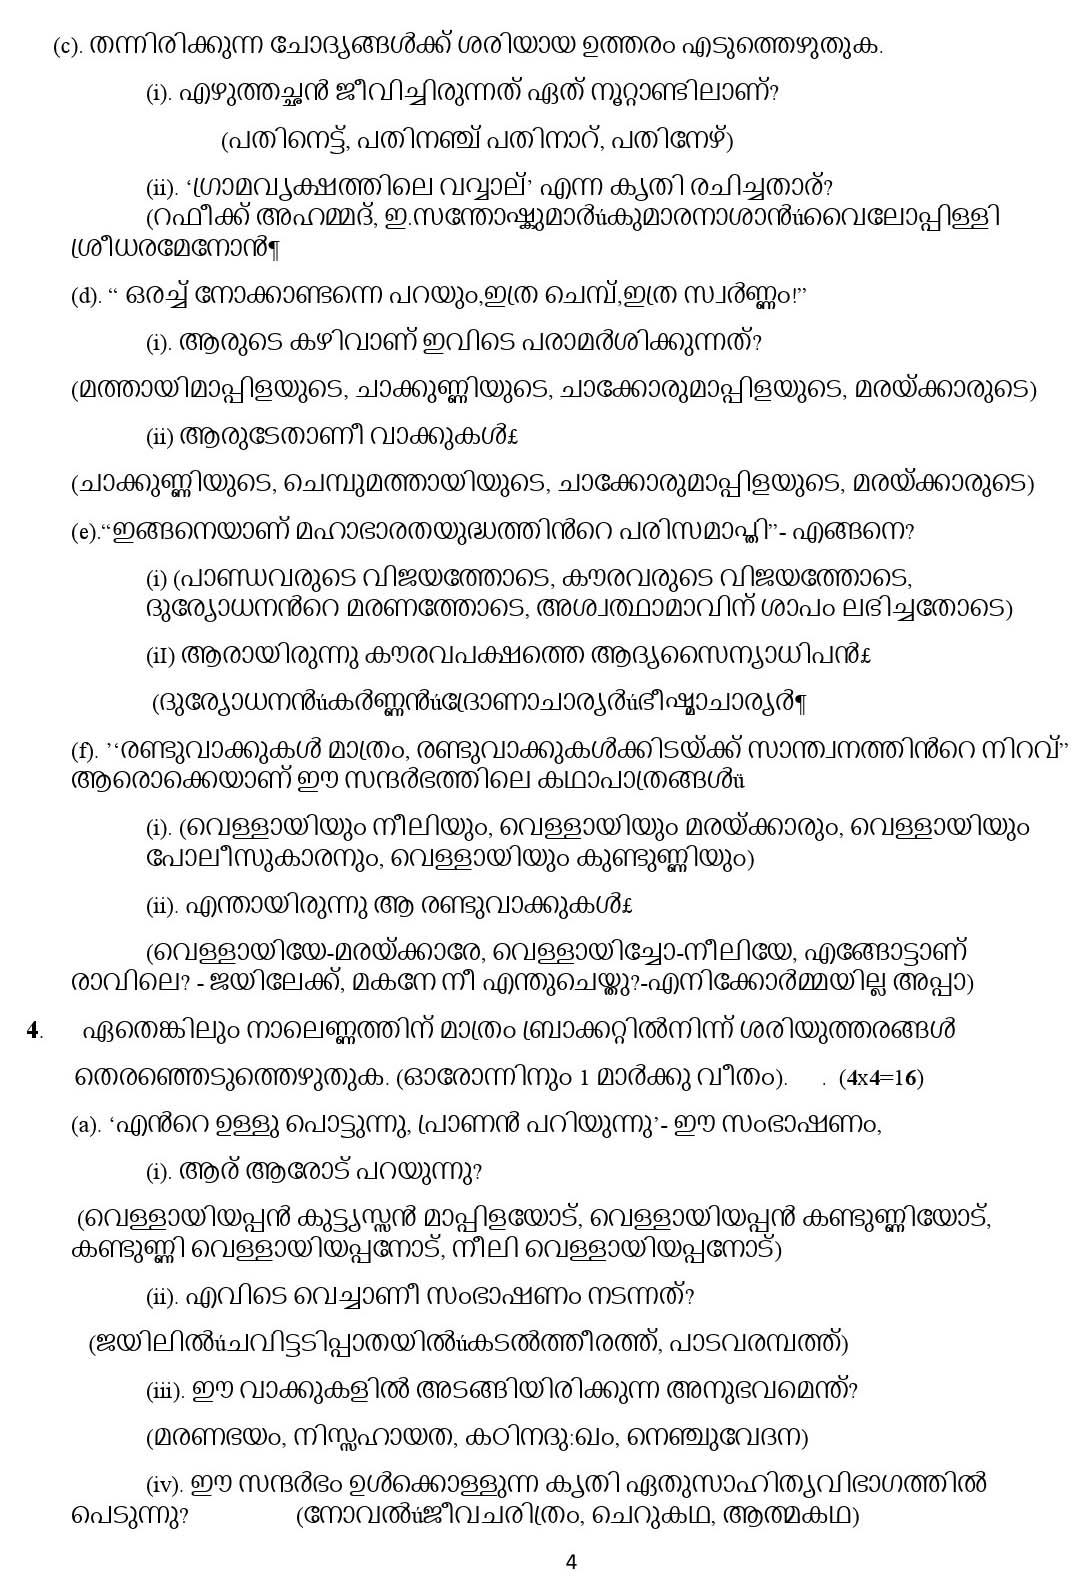 Malayalam CBSE Class X Sample Question Paper 2020 21 - Image 4